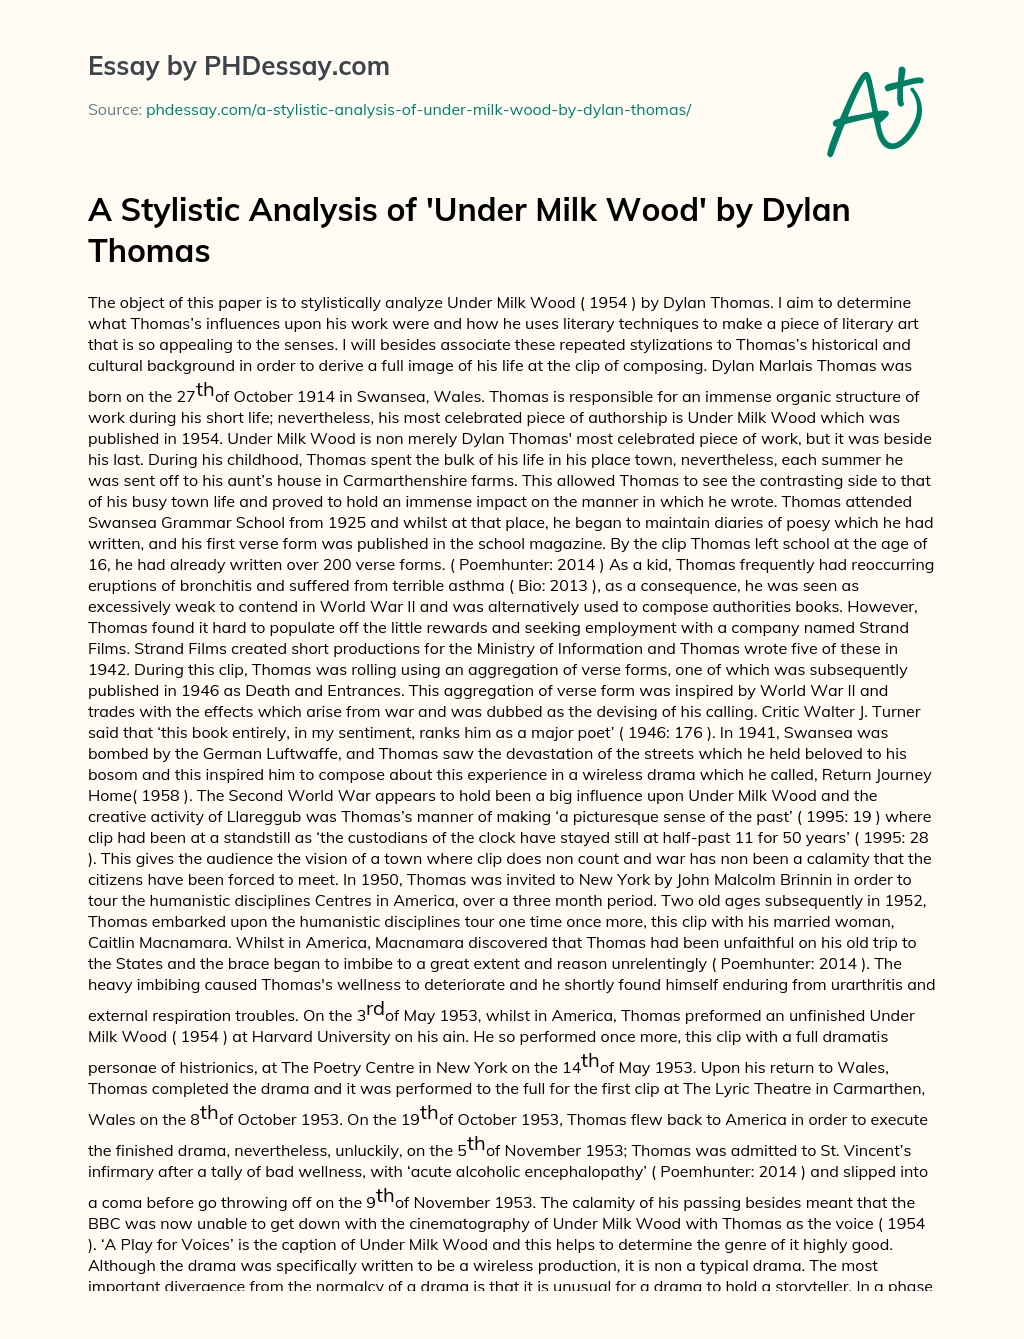 A Stylistic Analysis of ‘Under Milk Wood’ by Dylan Thomas essay